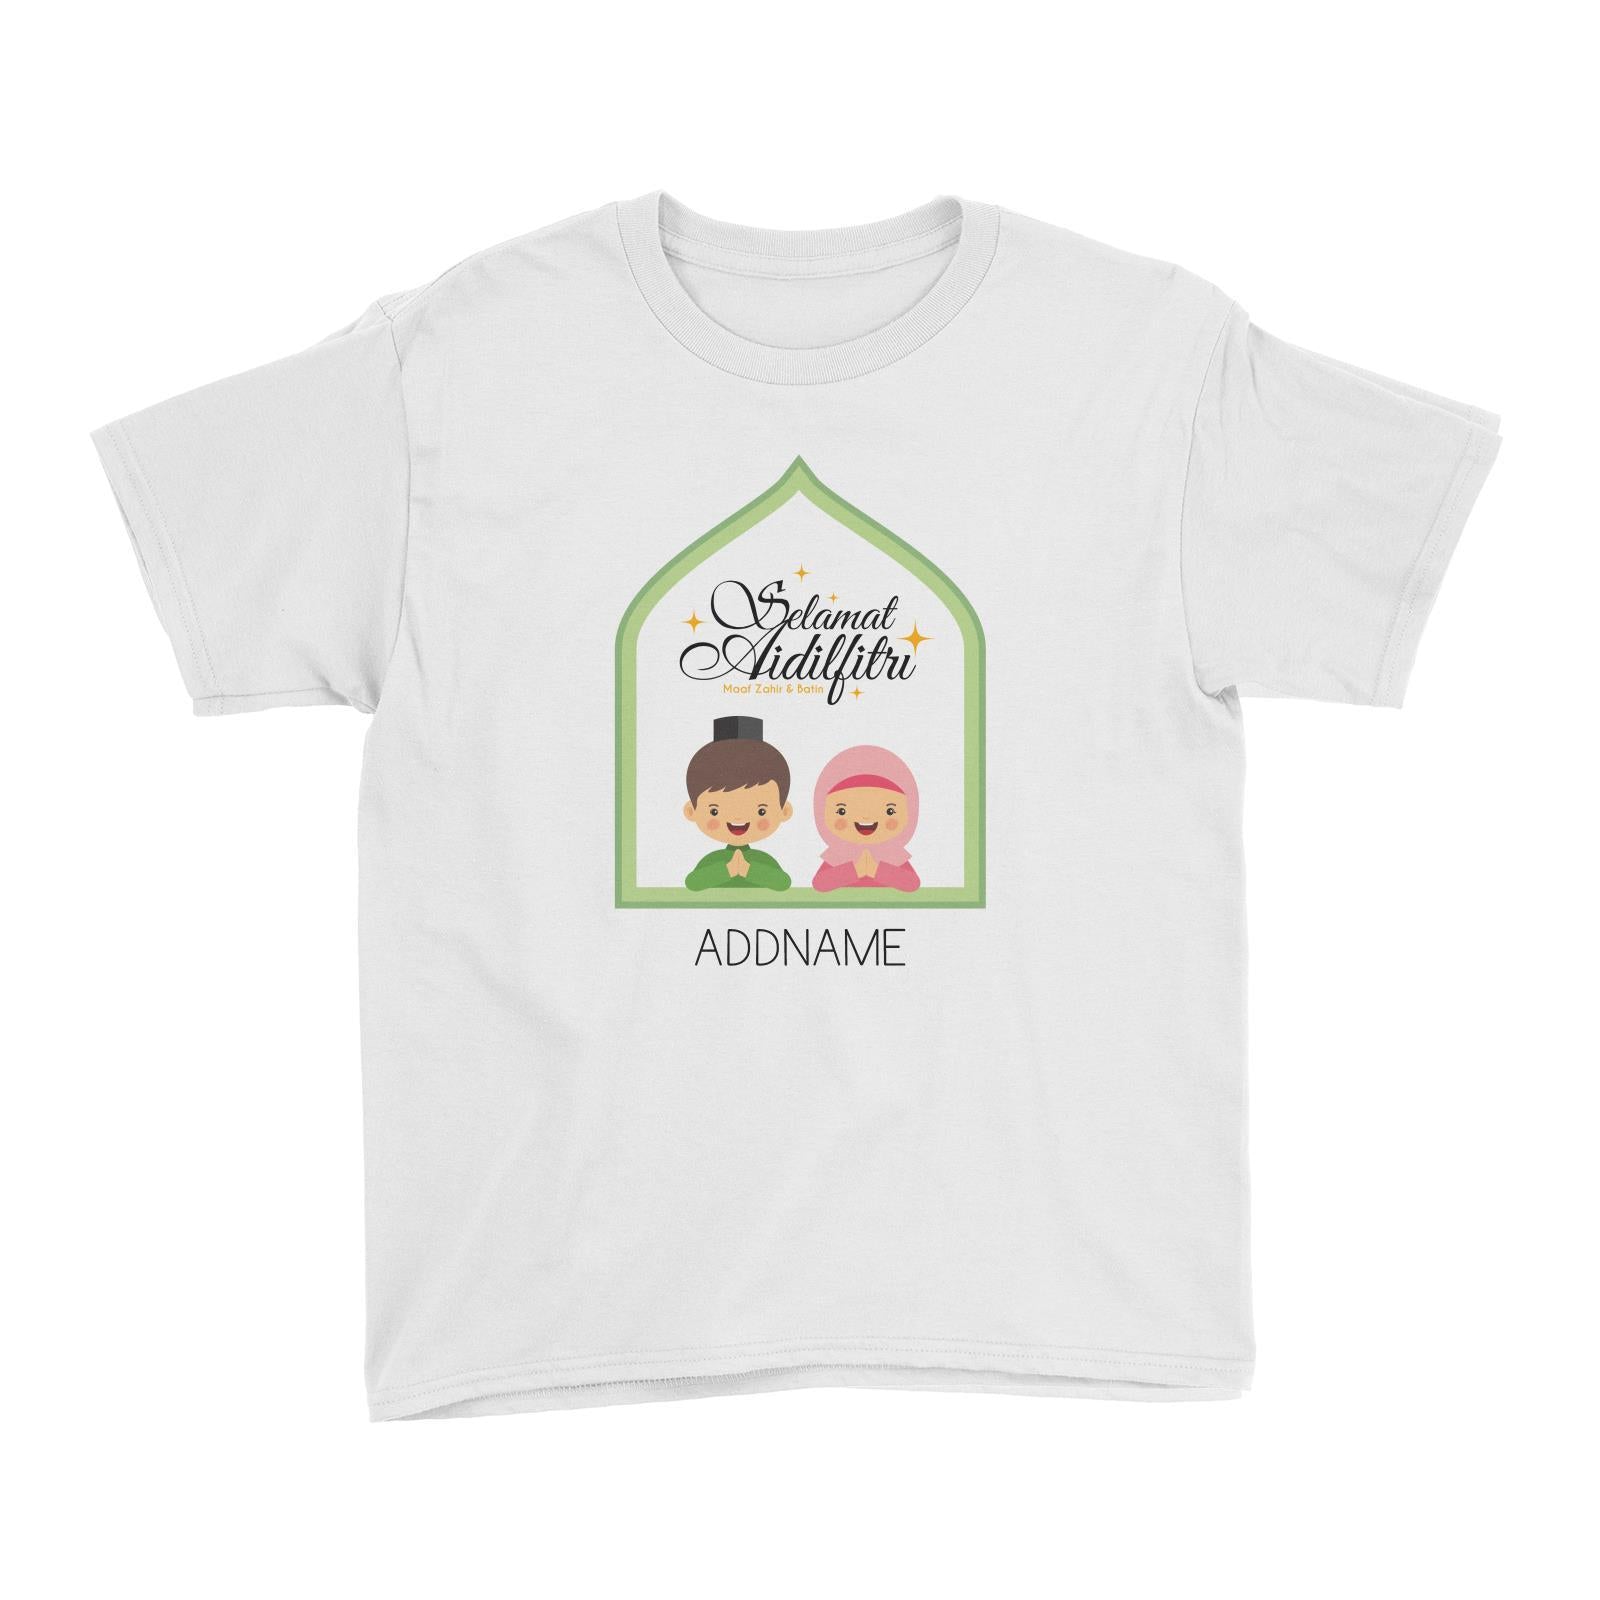 Selamat Aidilfitri Lady N Man Kid's T-Shirt Raya Personalizable Designs Sweet Character